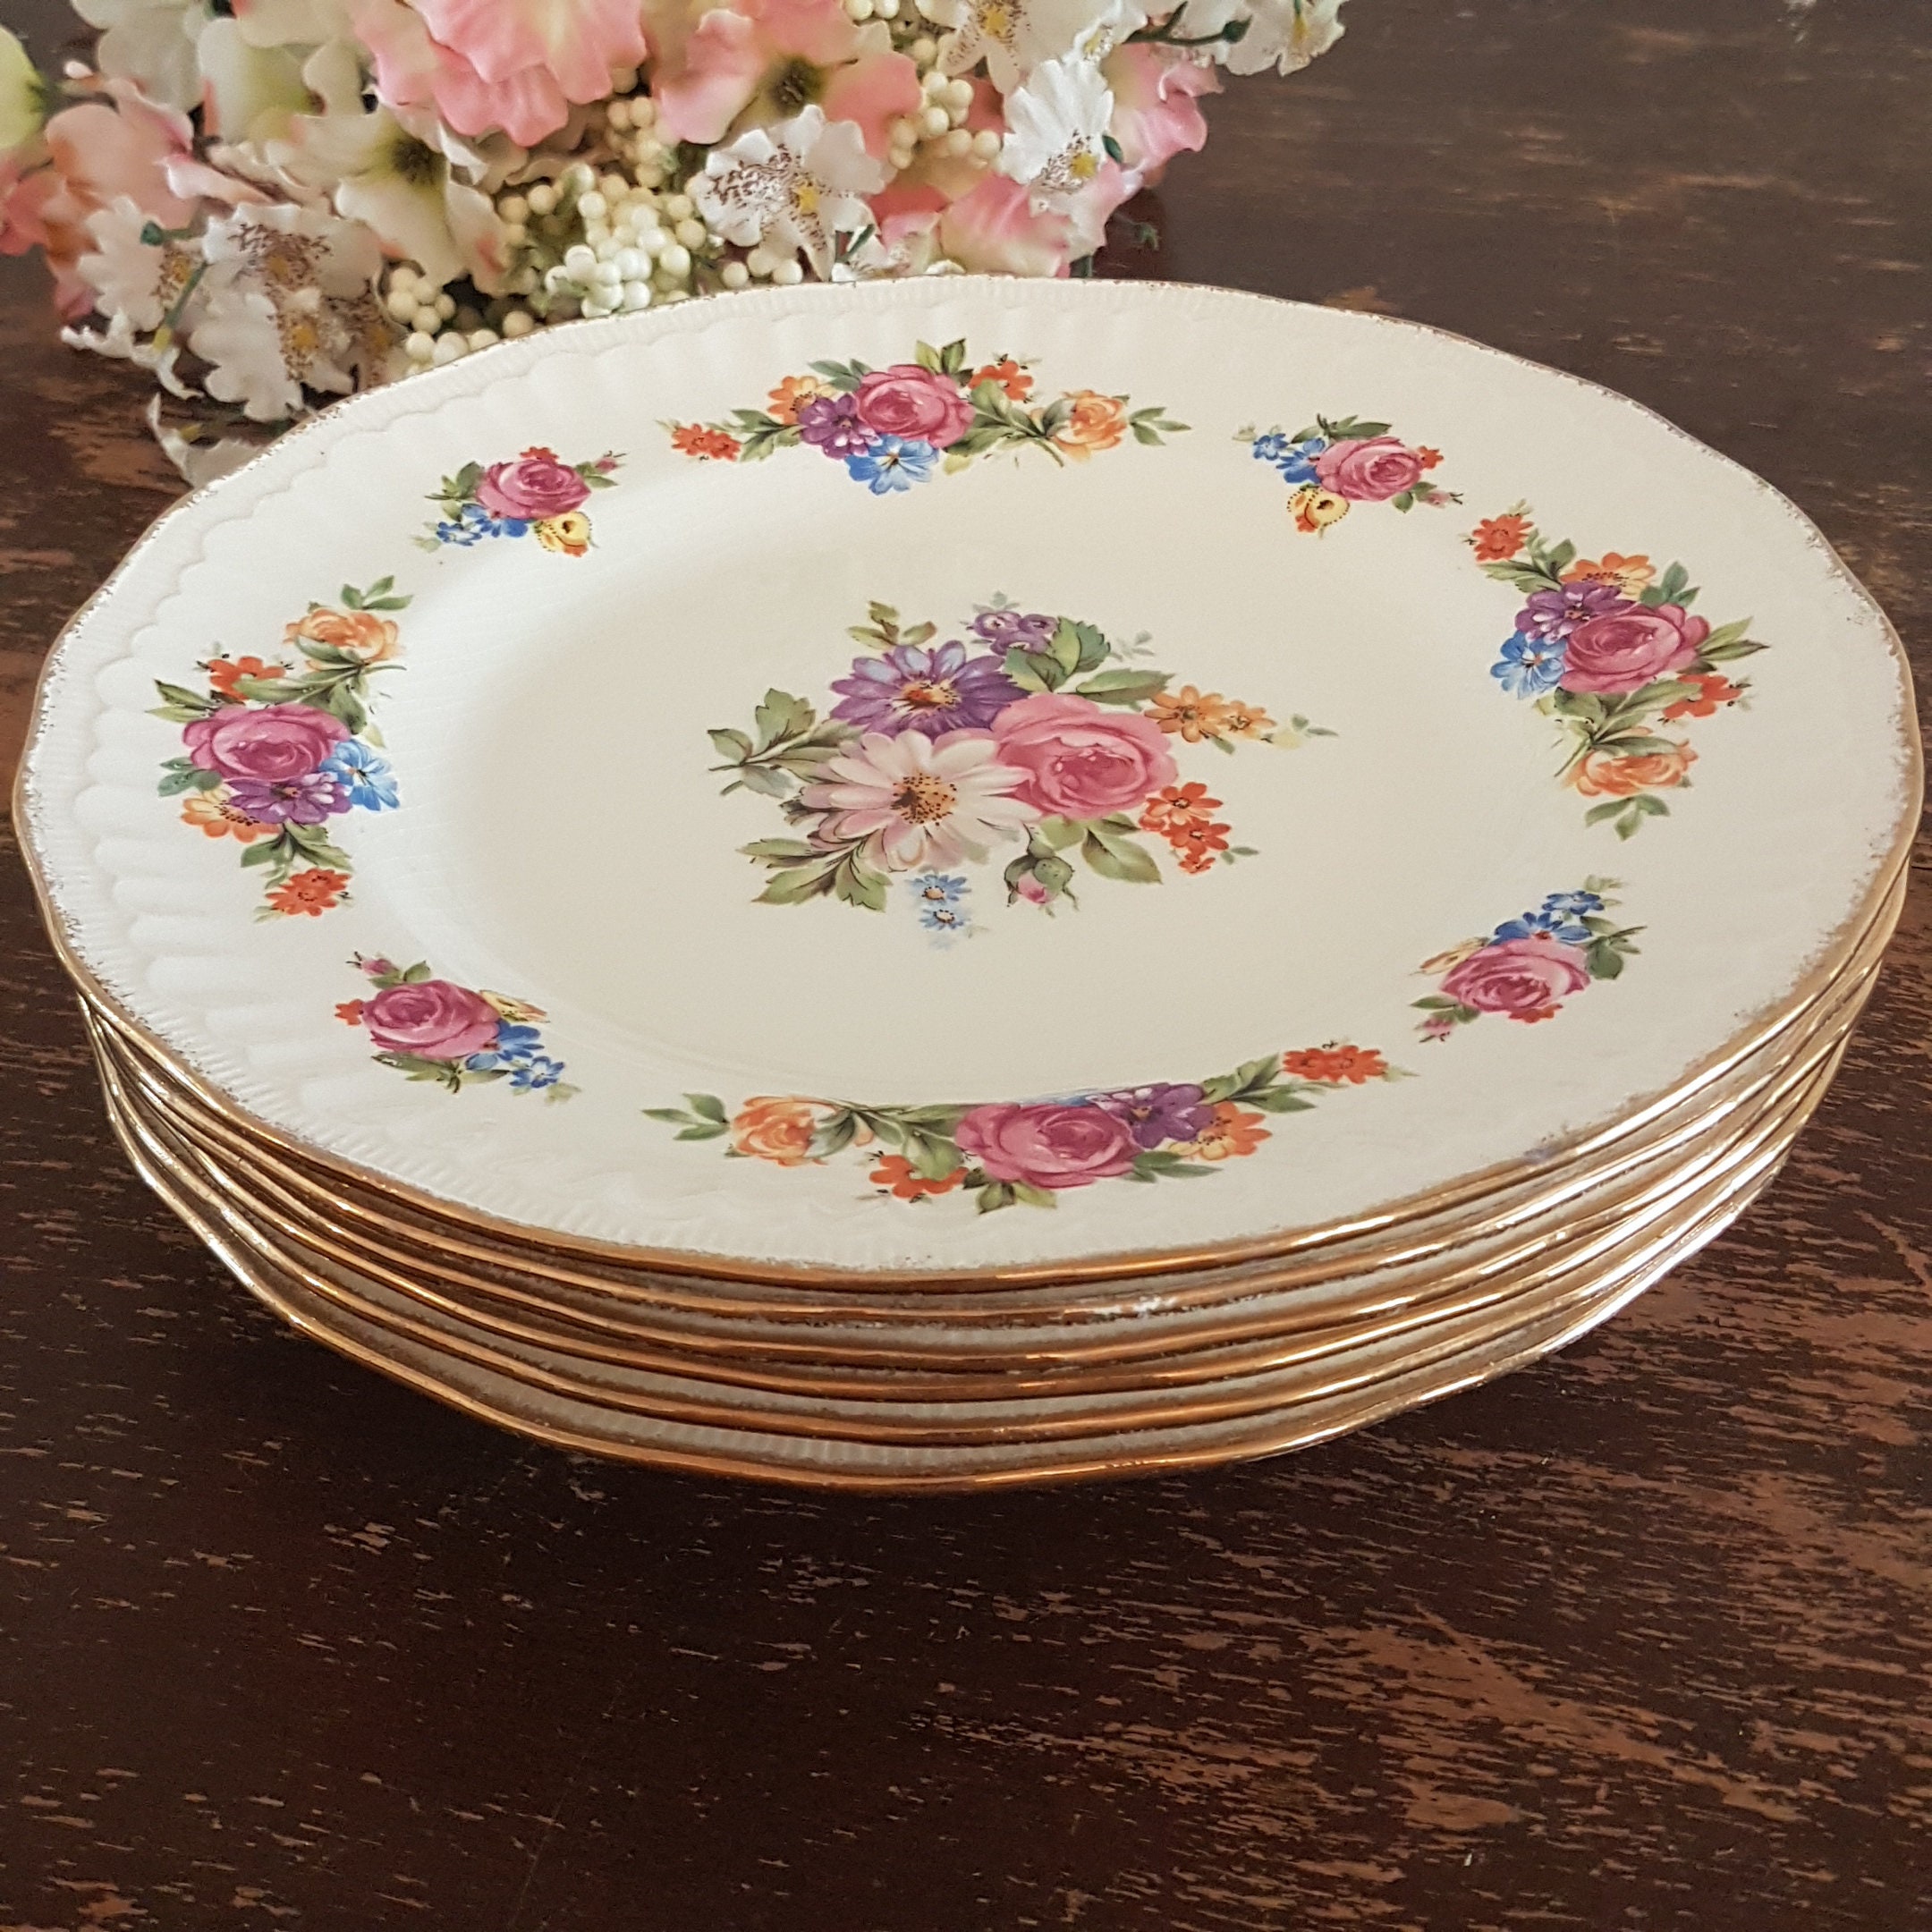 Vintage Happy 80th Birthday Decorative Porcelain Plate Transferware ...